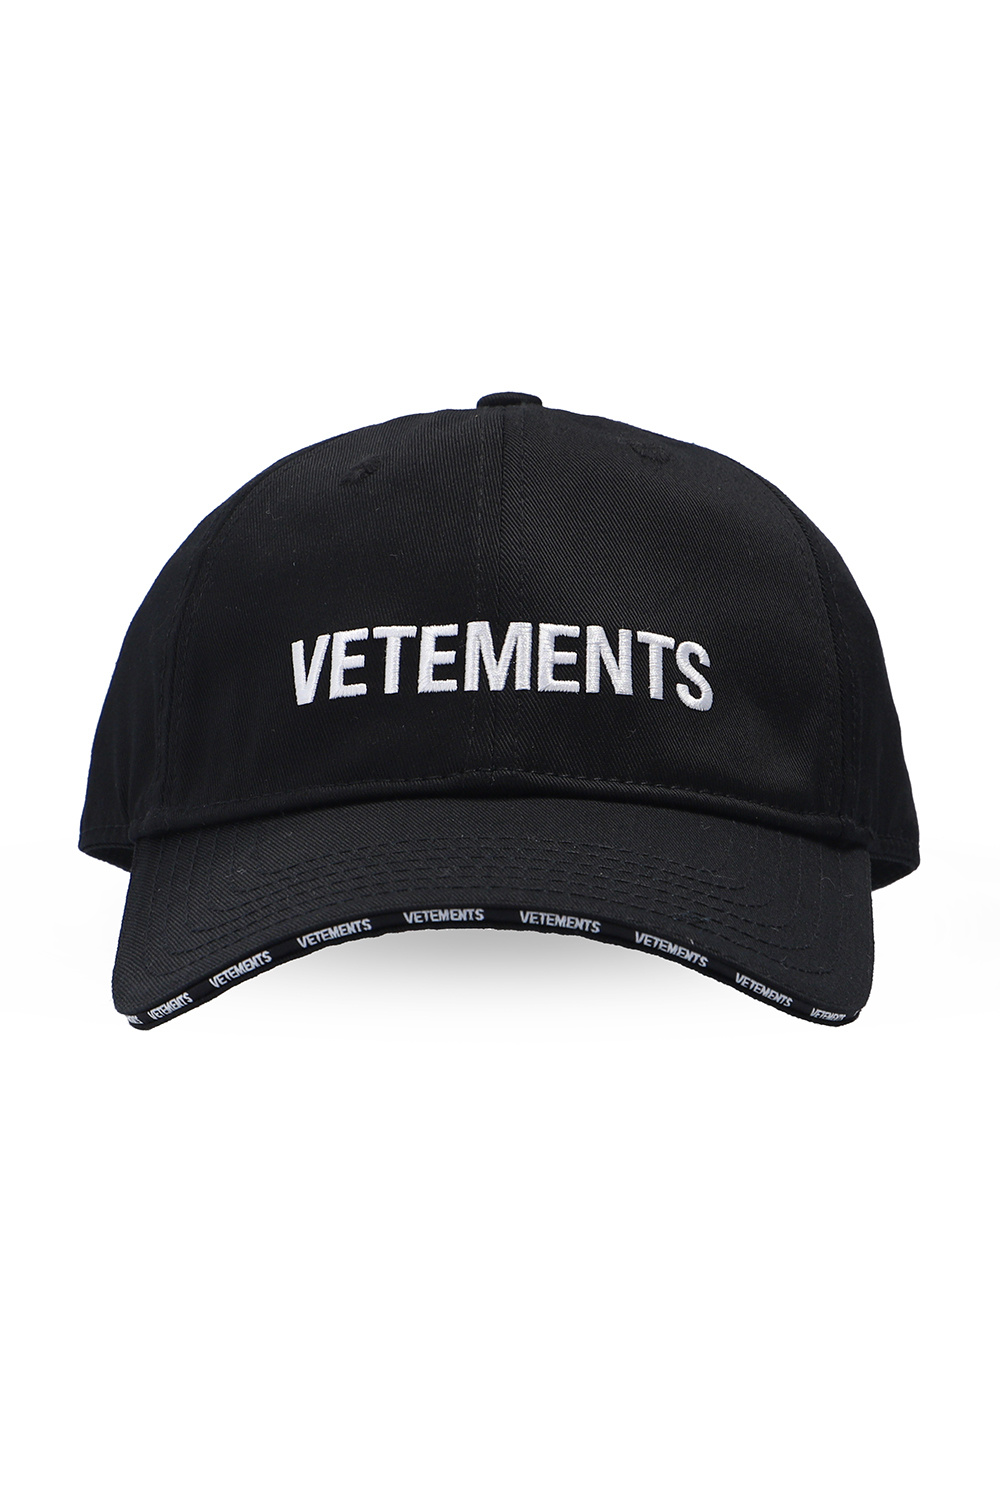 hat men s lighters Knitwear - Black Marc Jacobs The Traveler embroidered cap  VETEMENTS - IetpShops GB